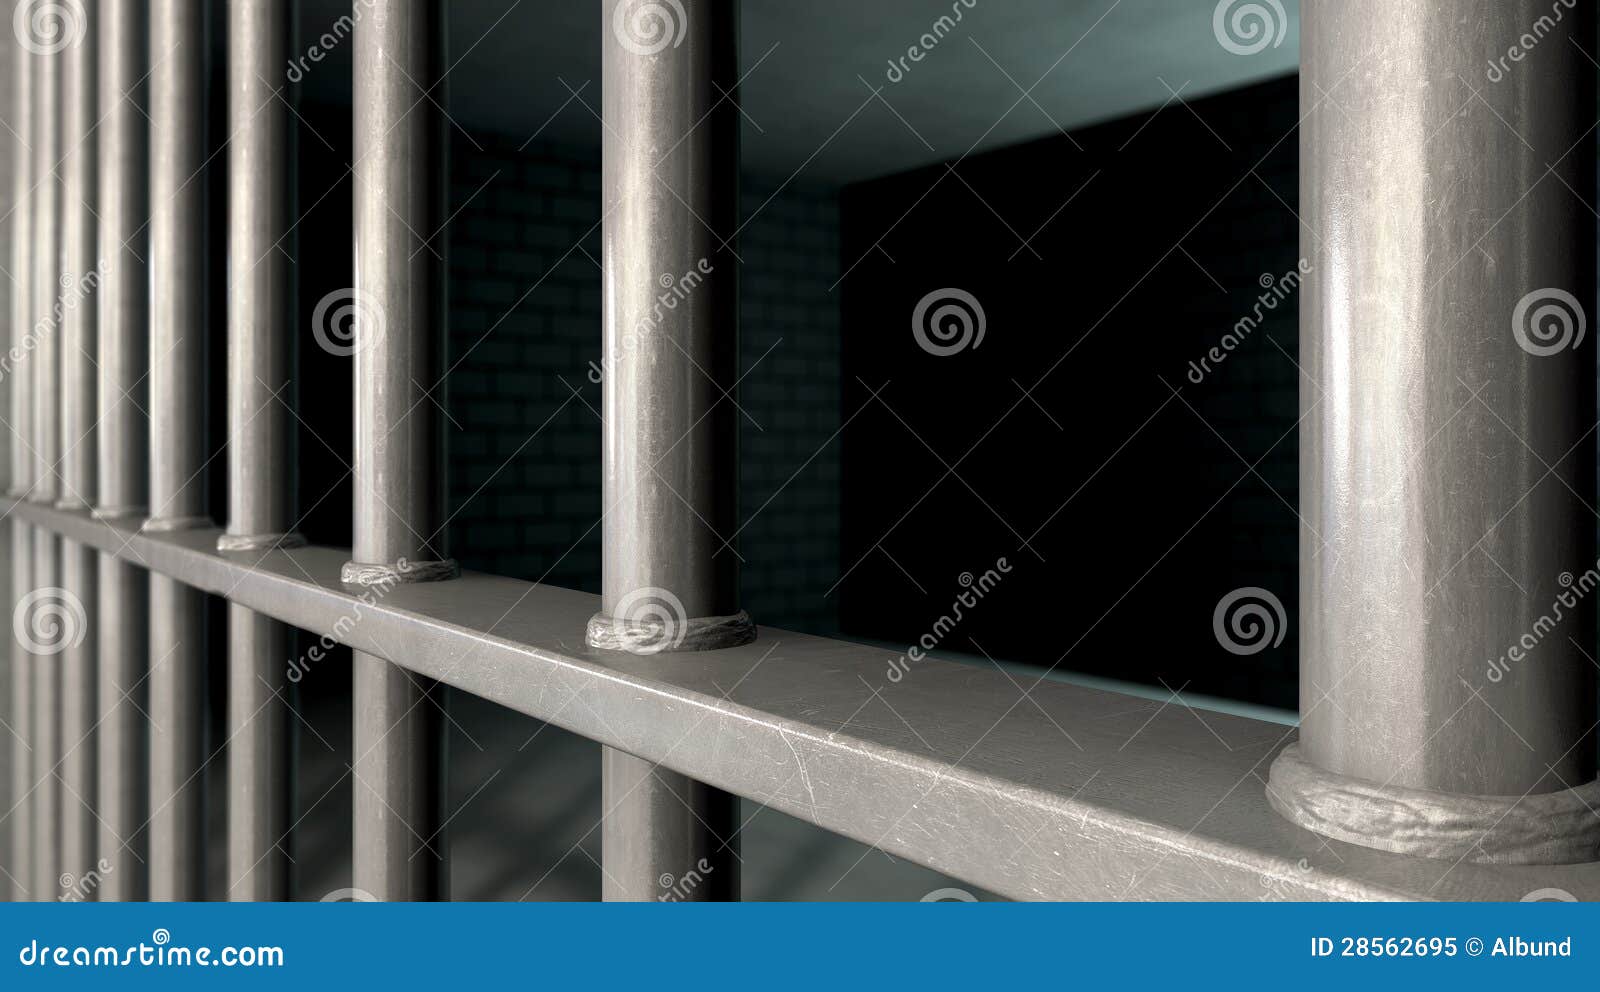 jail cell bars closeup